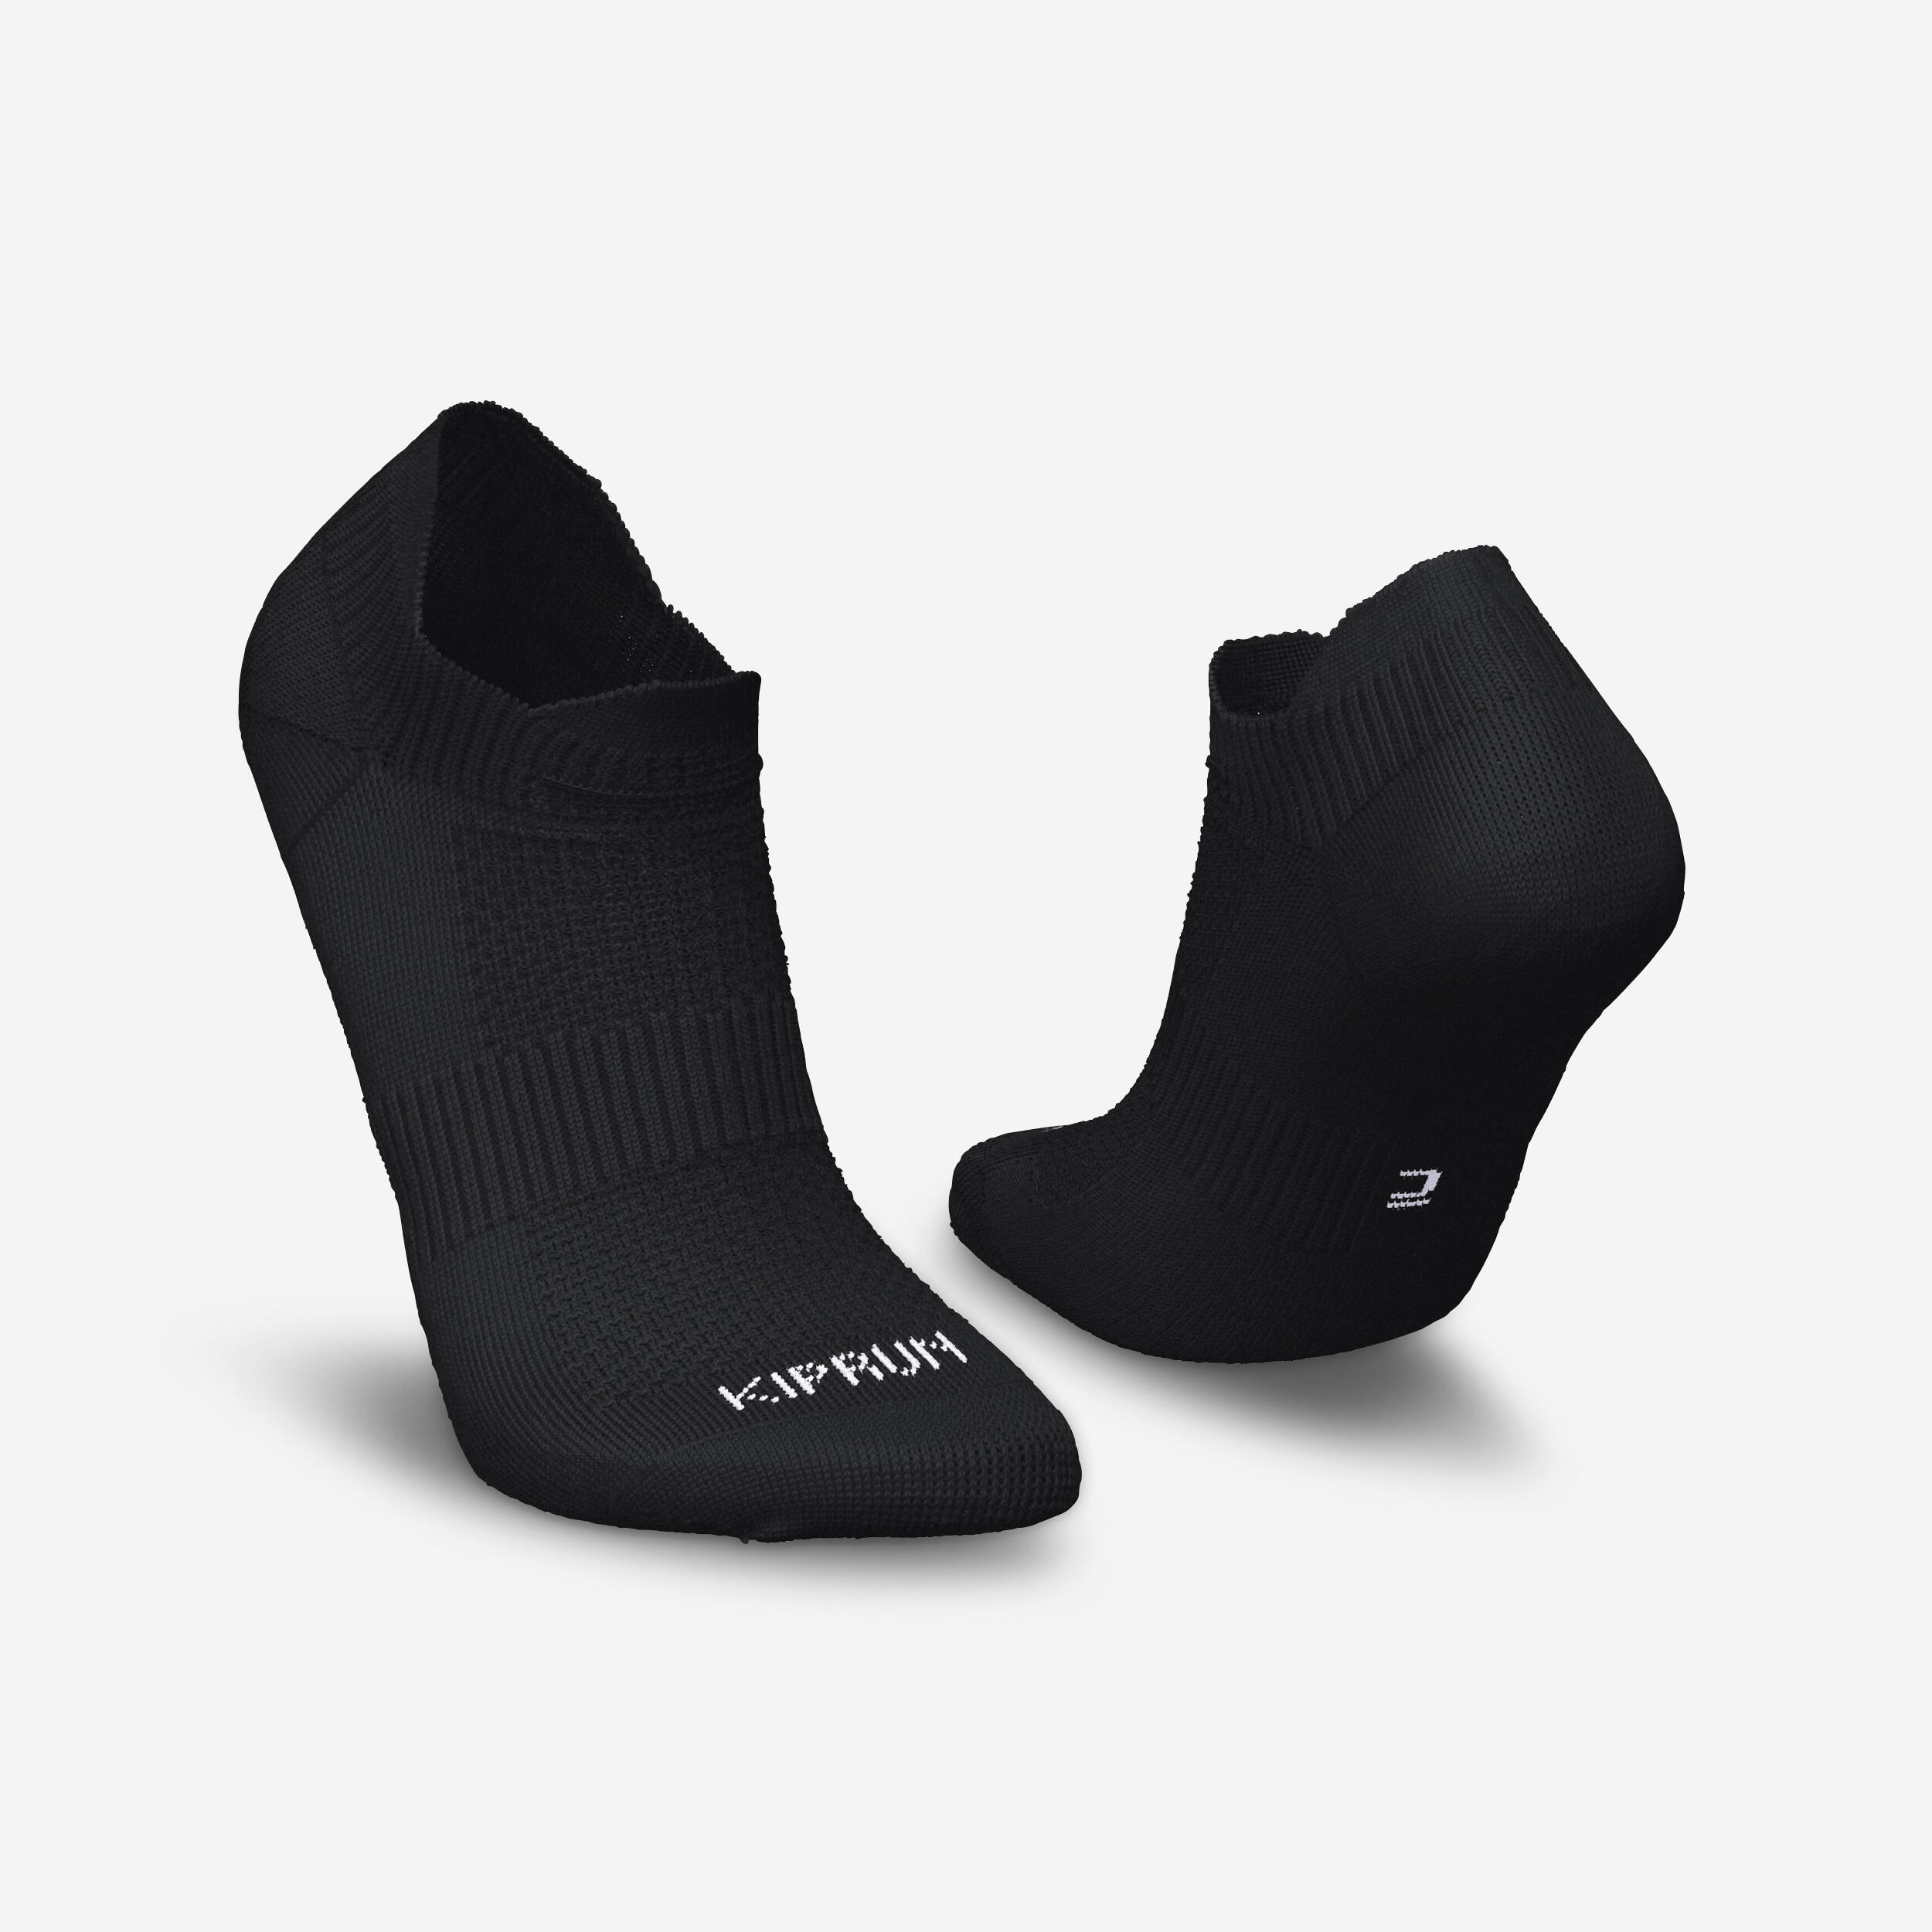 Zando Women's Non Slip Socks Grip Socks for Women Pilates Towless Grippy Yoga  Socks 3 Pairs 